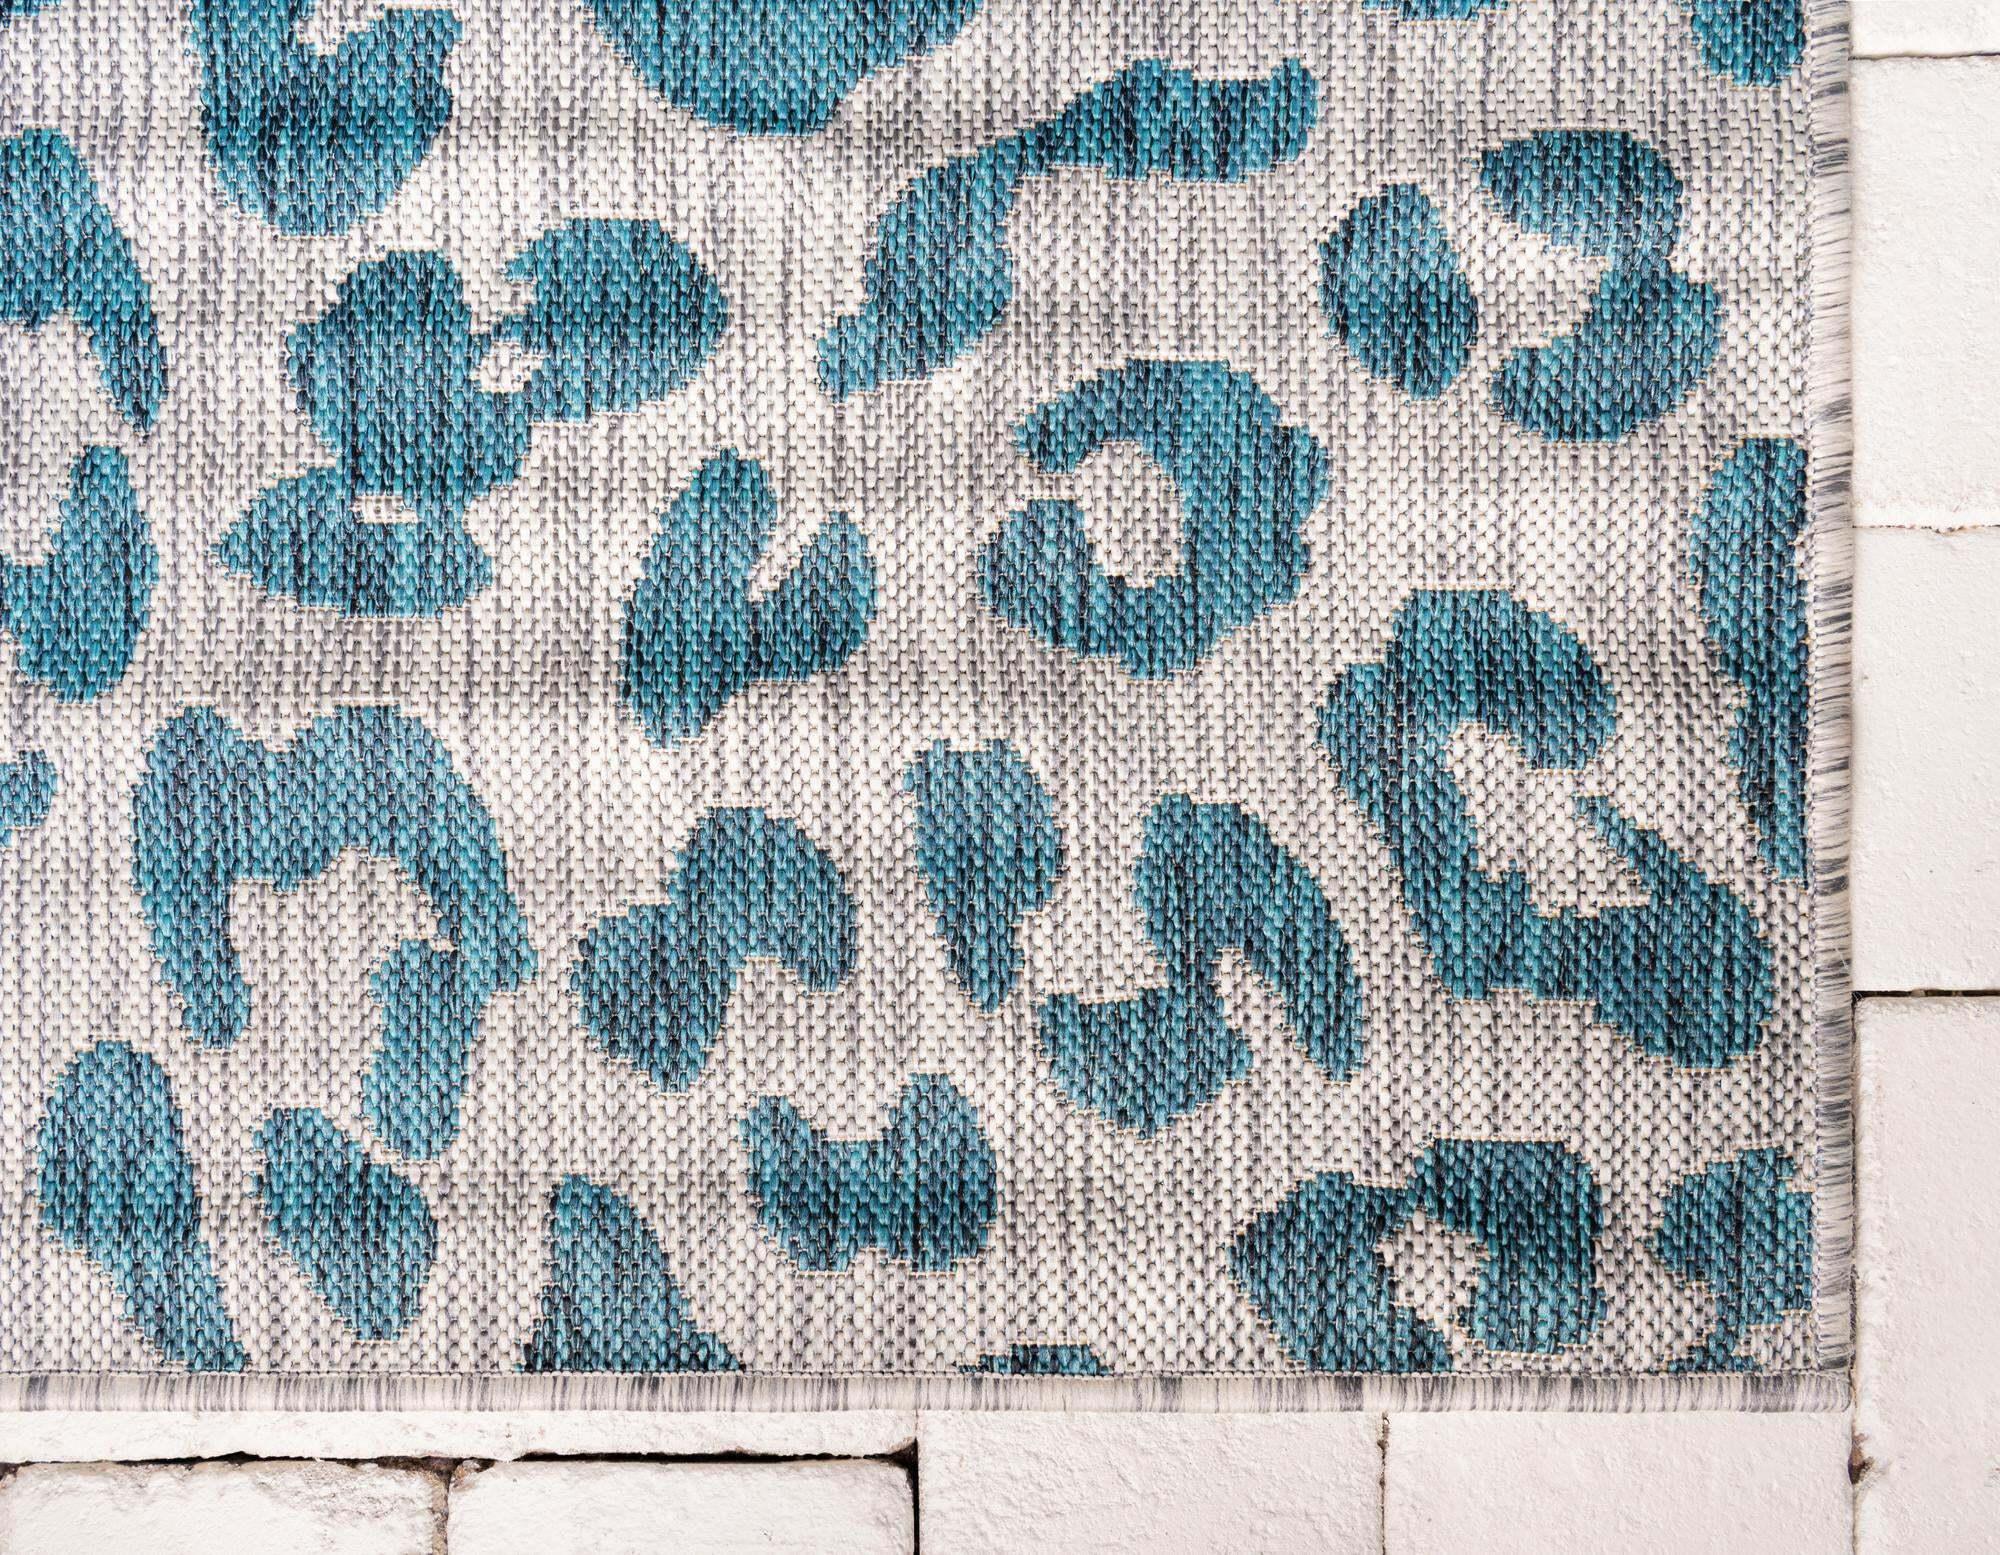 Unique Loom Outdoor Rugs - Outdoor Safari Animal Print Rectangular 8x11 Rug Teal & Light Gray